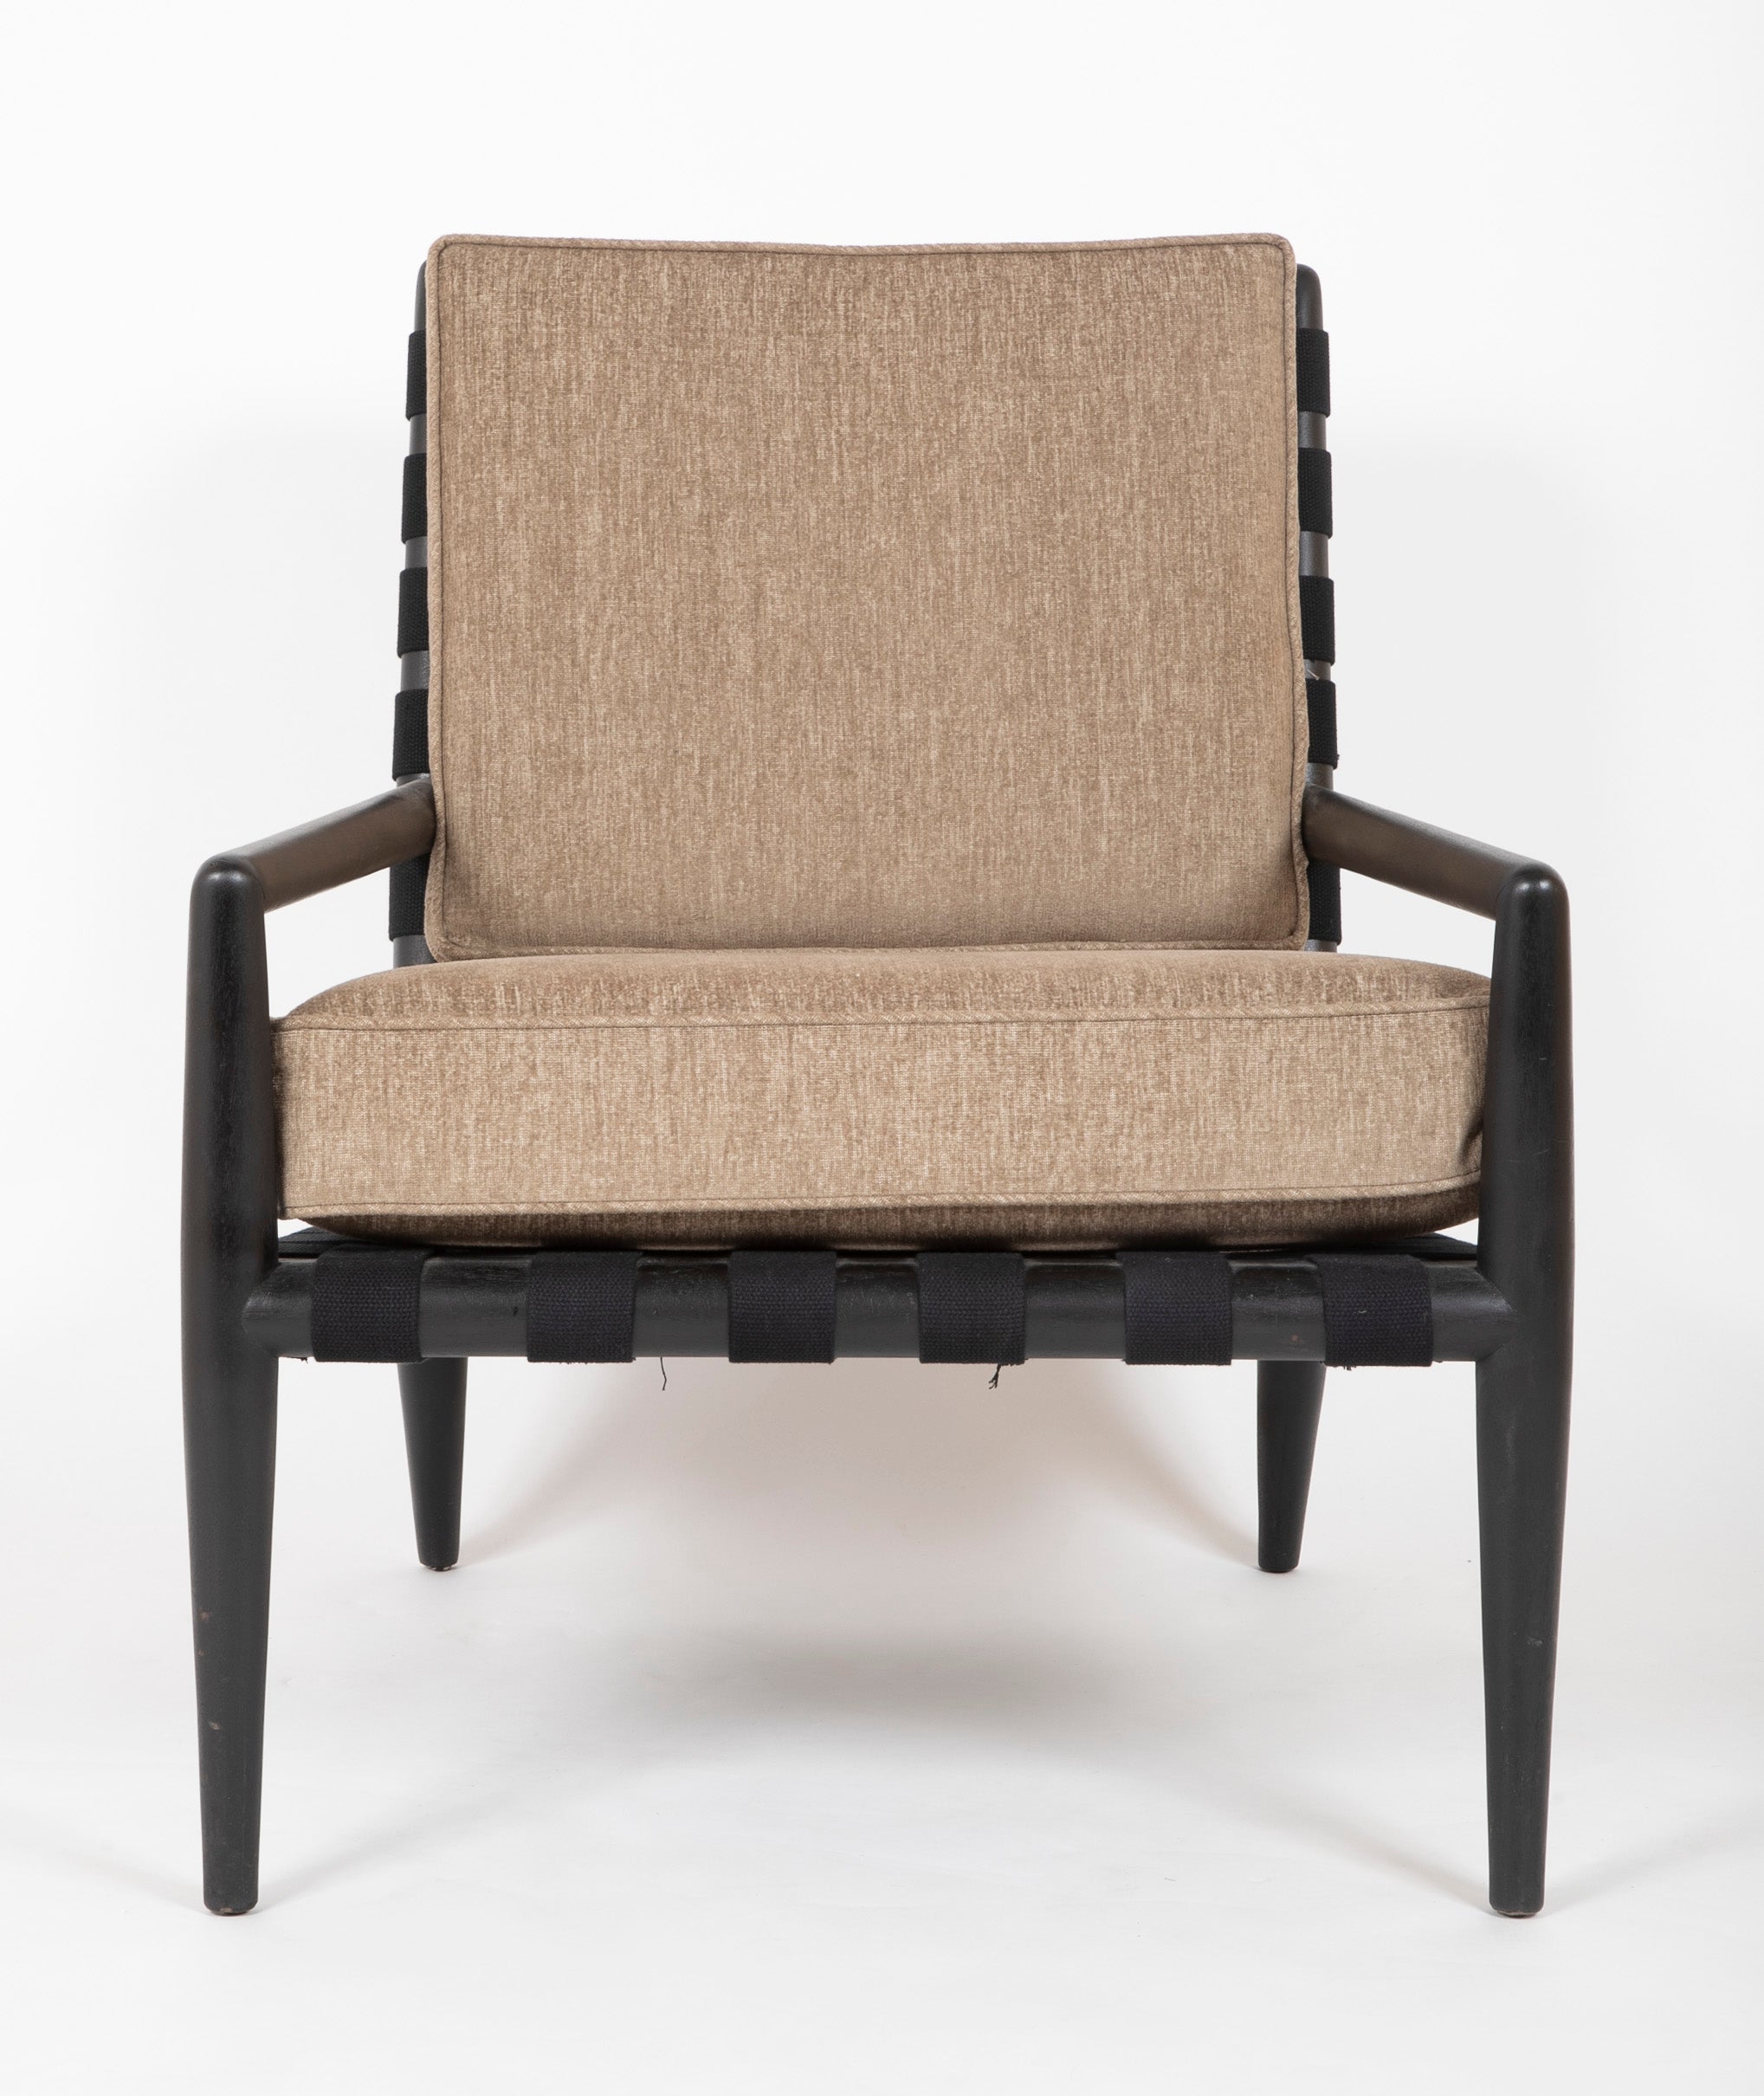 Pair of T. H. Robsjohn-Gibbings Lounge Chairs - Model 1720